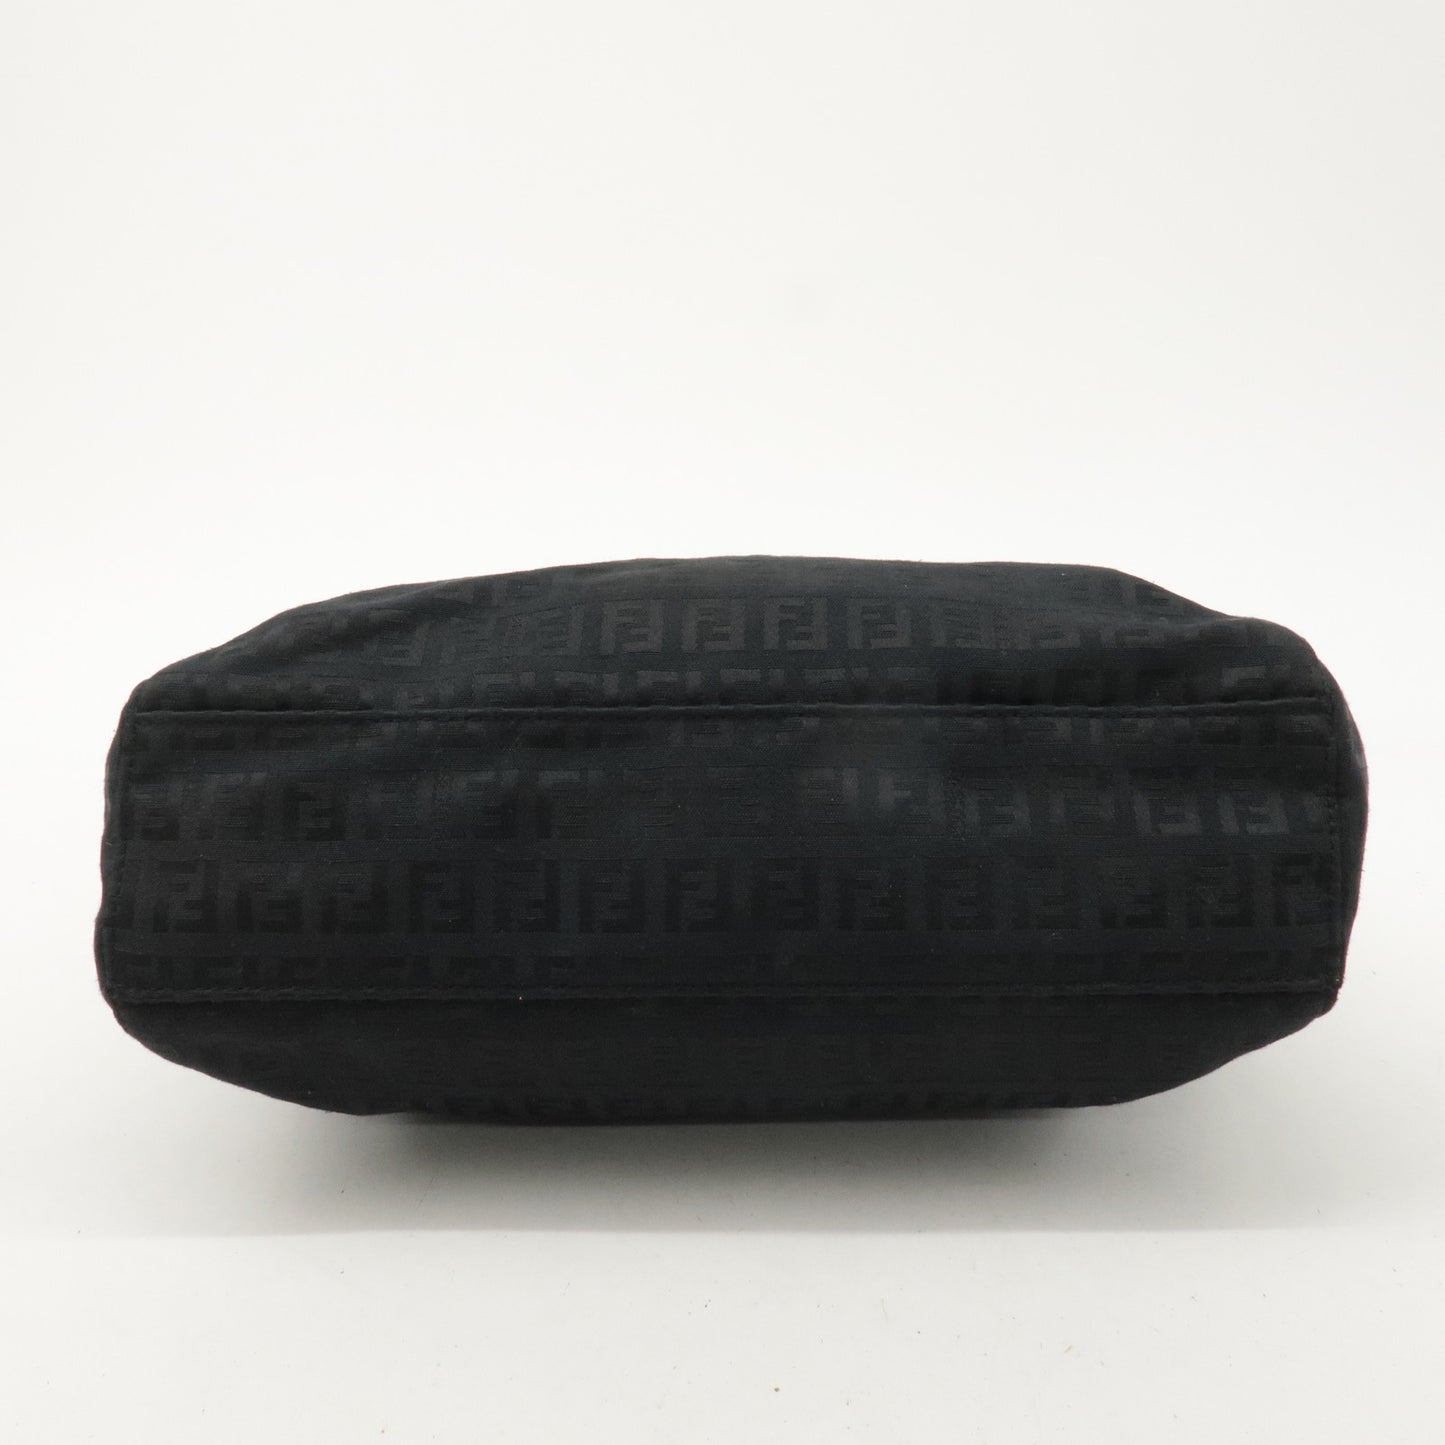 FENDI Zucchino Canvas Leather Hand Bag Tote Bag Black 8BH133